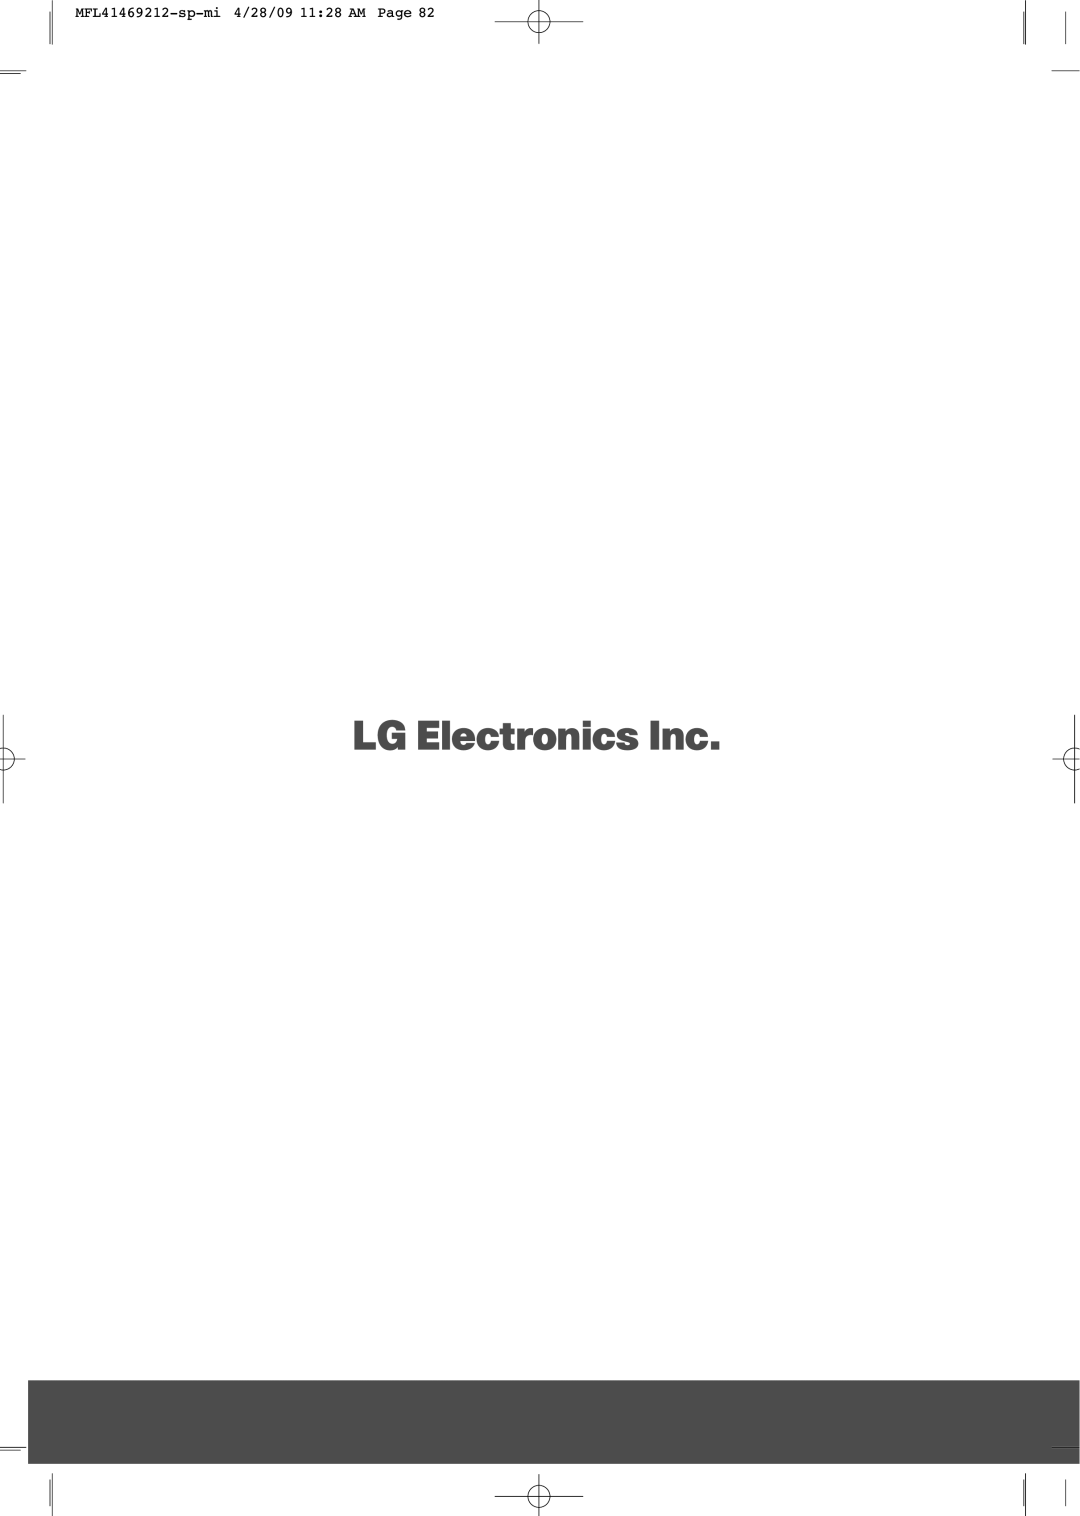 LG Electronics 2230R-MA manual MFL41469212-sp-mi 4/28/09 1128 AM Page 